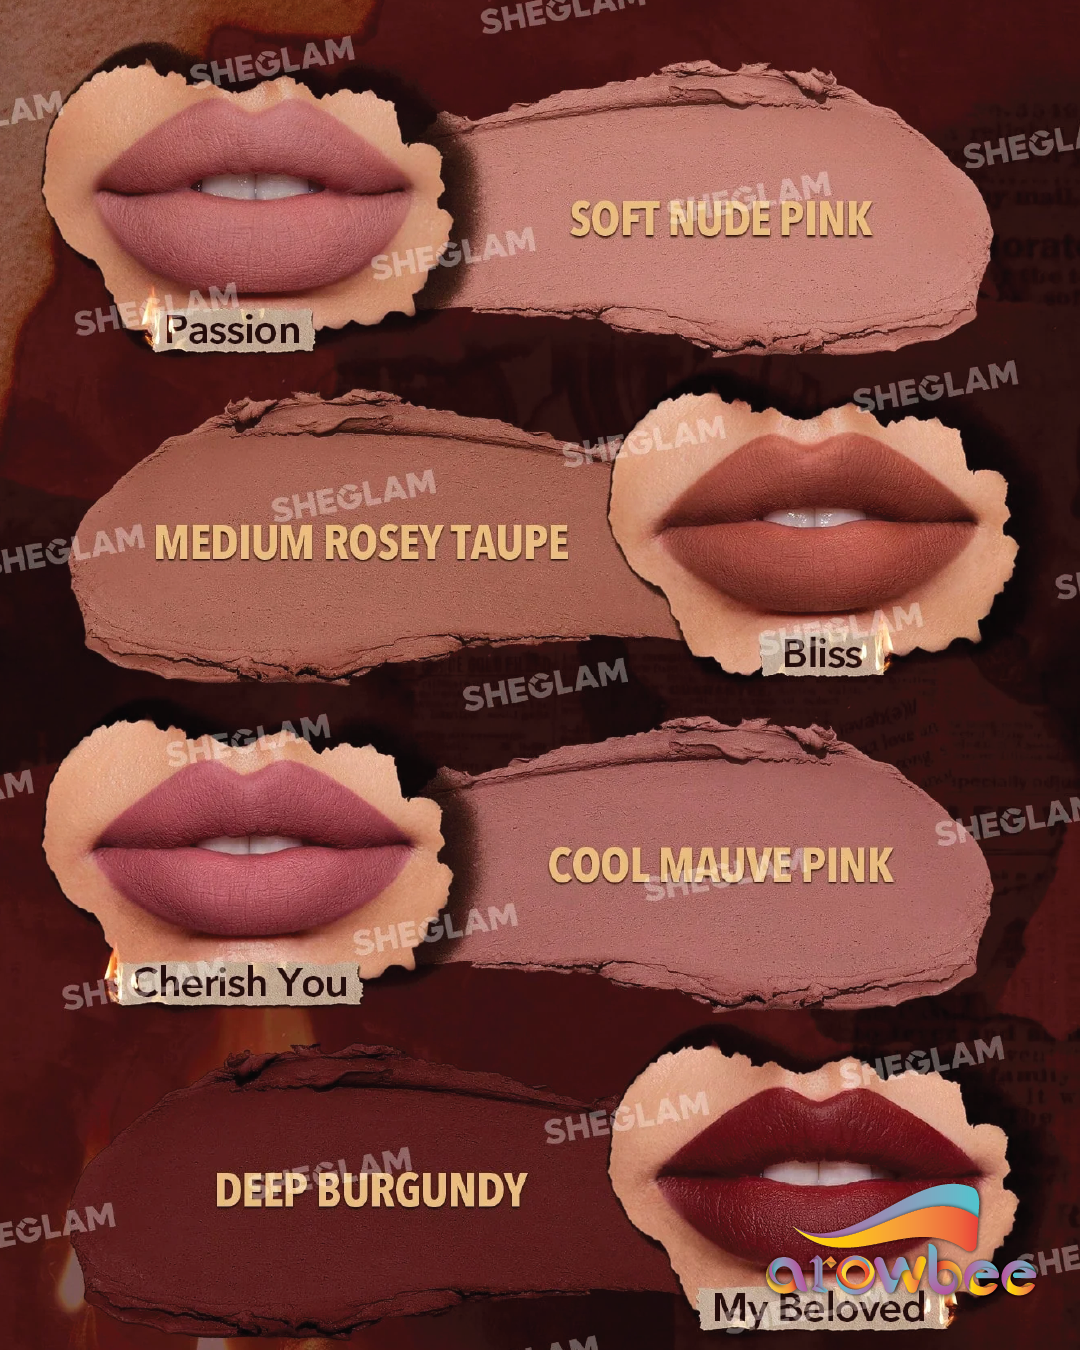 SHEGLAM Dynamatte Boom Long-Lasting Matte Lipstick Set